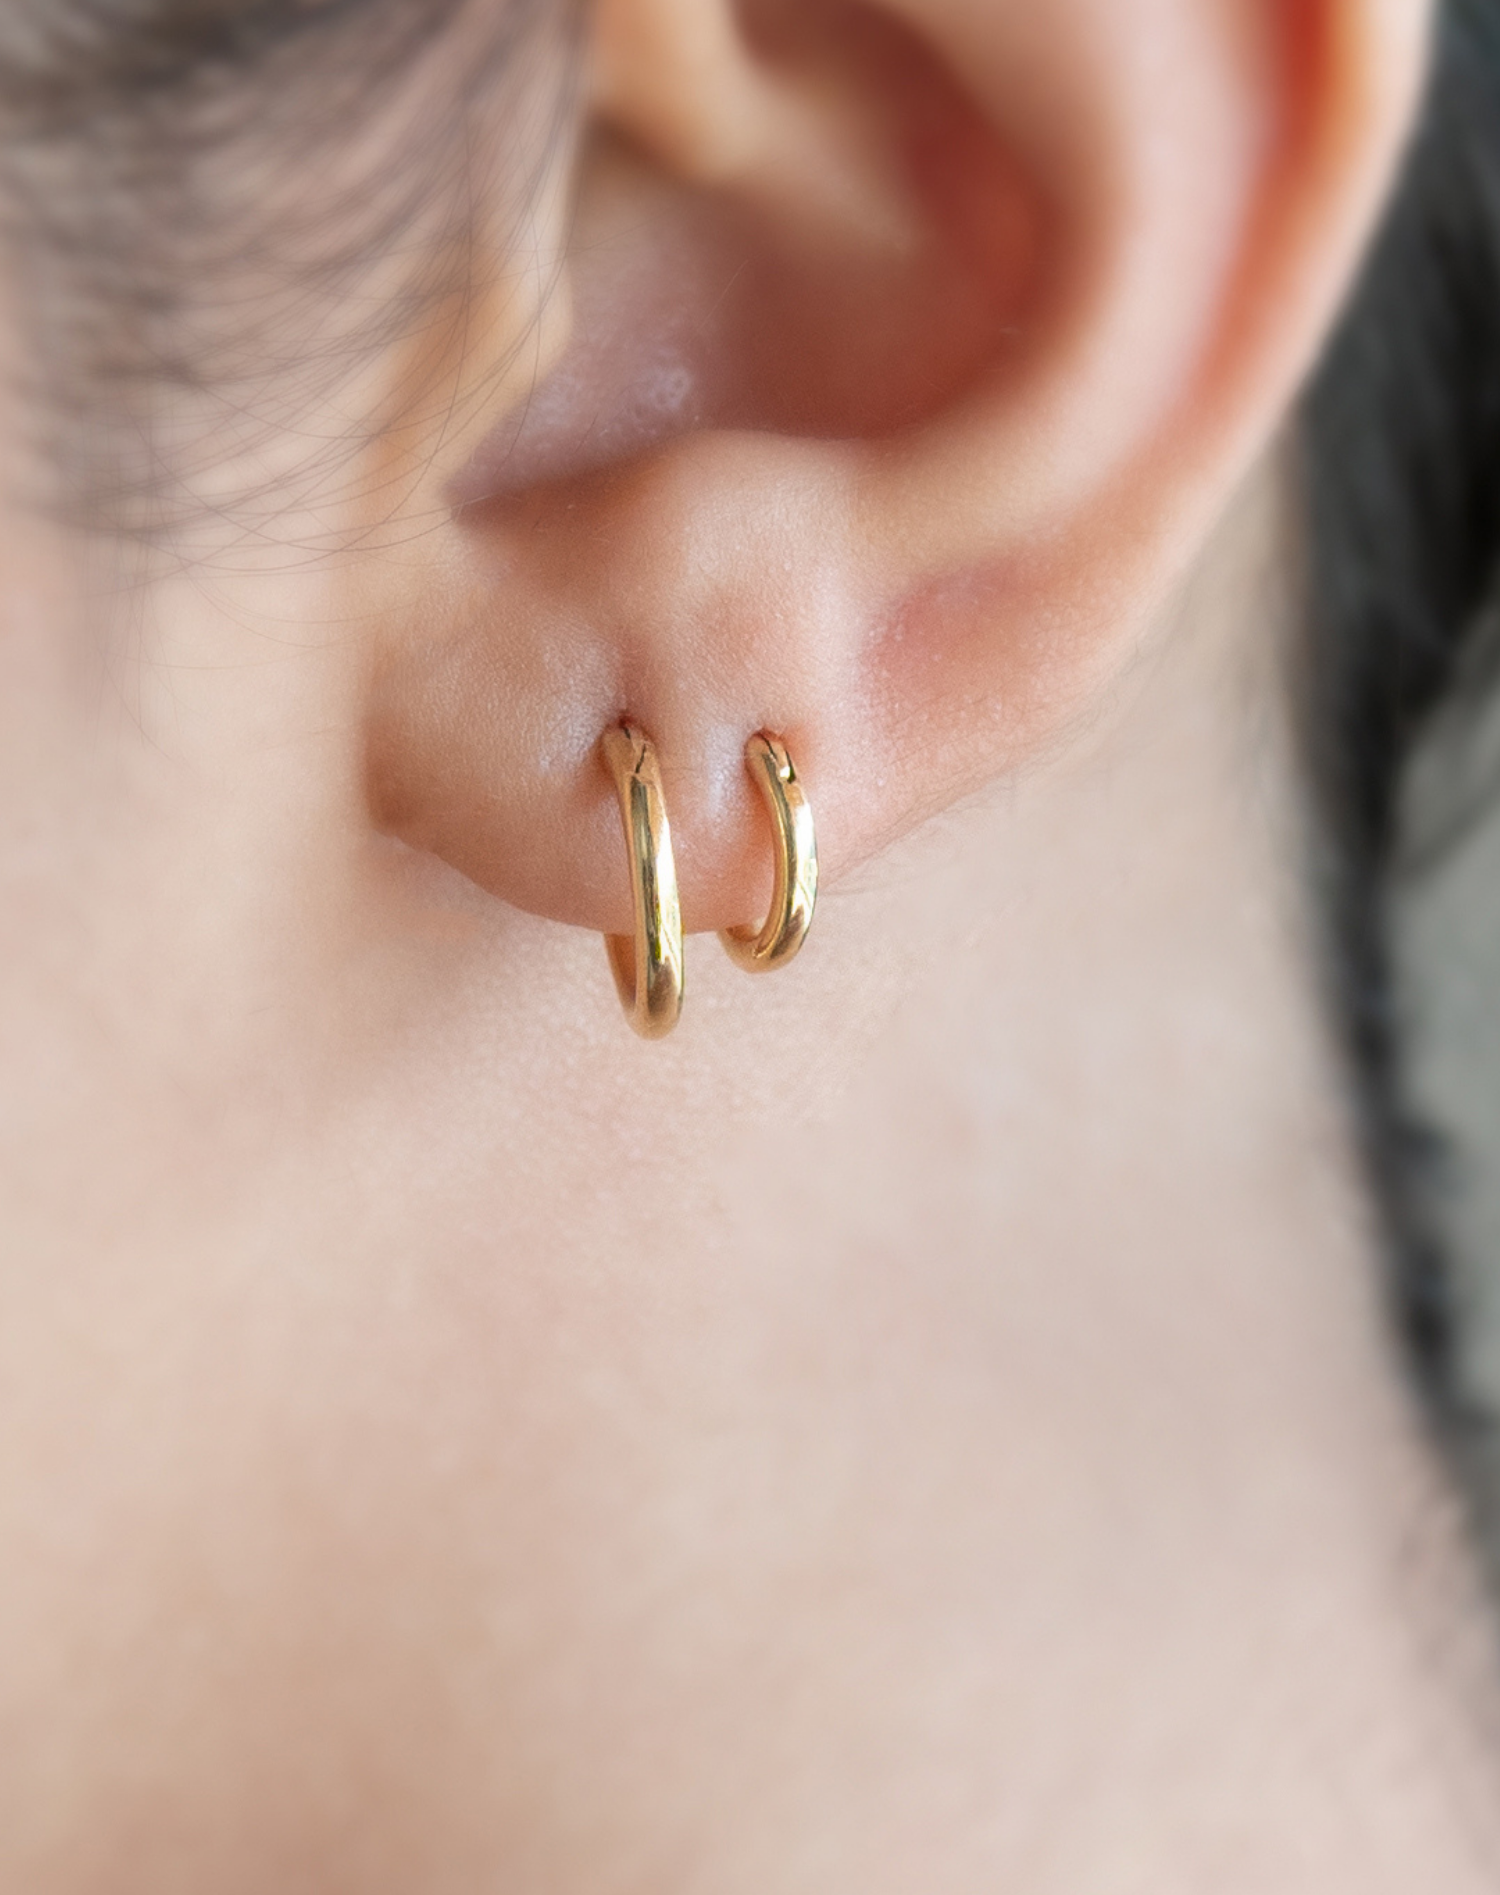 Gold Hoop Earrings, Solar Yellow Gold Hoops, Men's Earrings, Gold Hoop  Earrings Small, Gold Hoop Earrings Medium, Gold Hoop Earrings Large - Etsy  | Hoop earrings small, Small gold hoop earrings, Gold